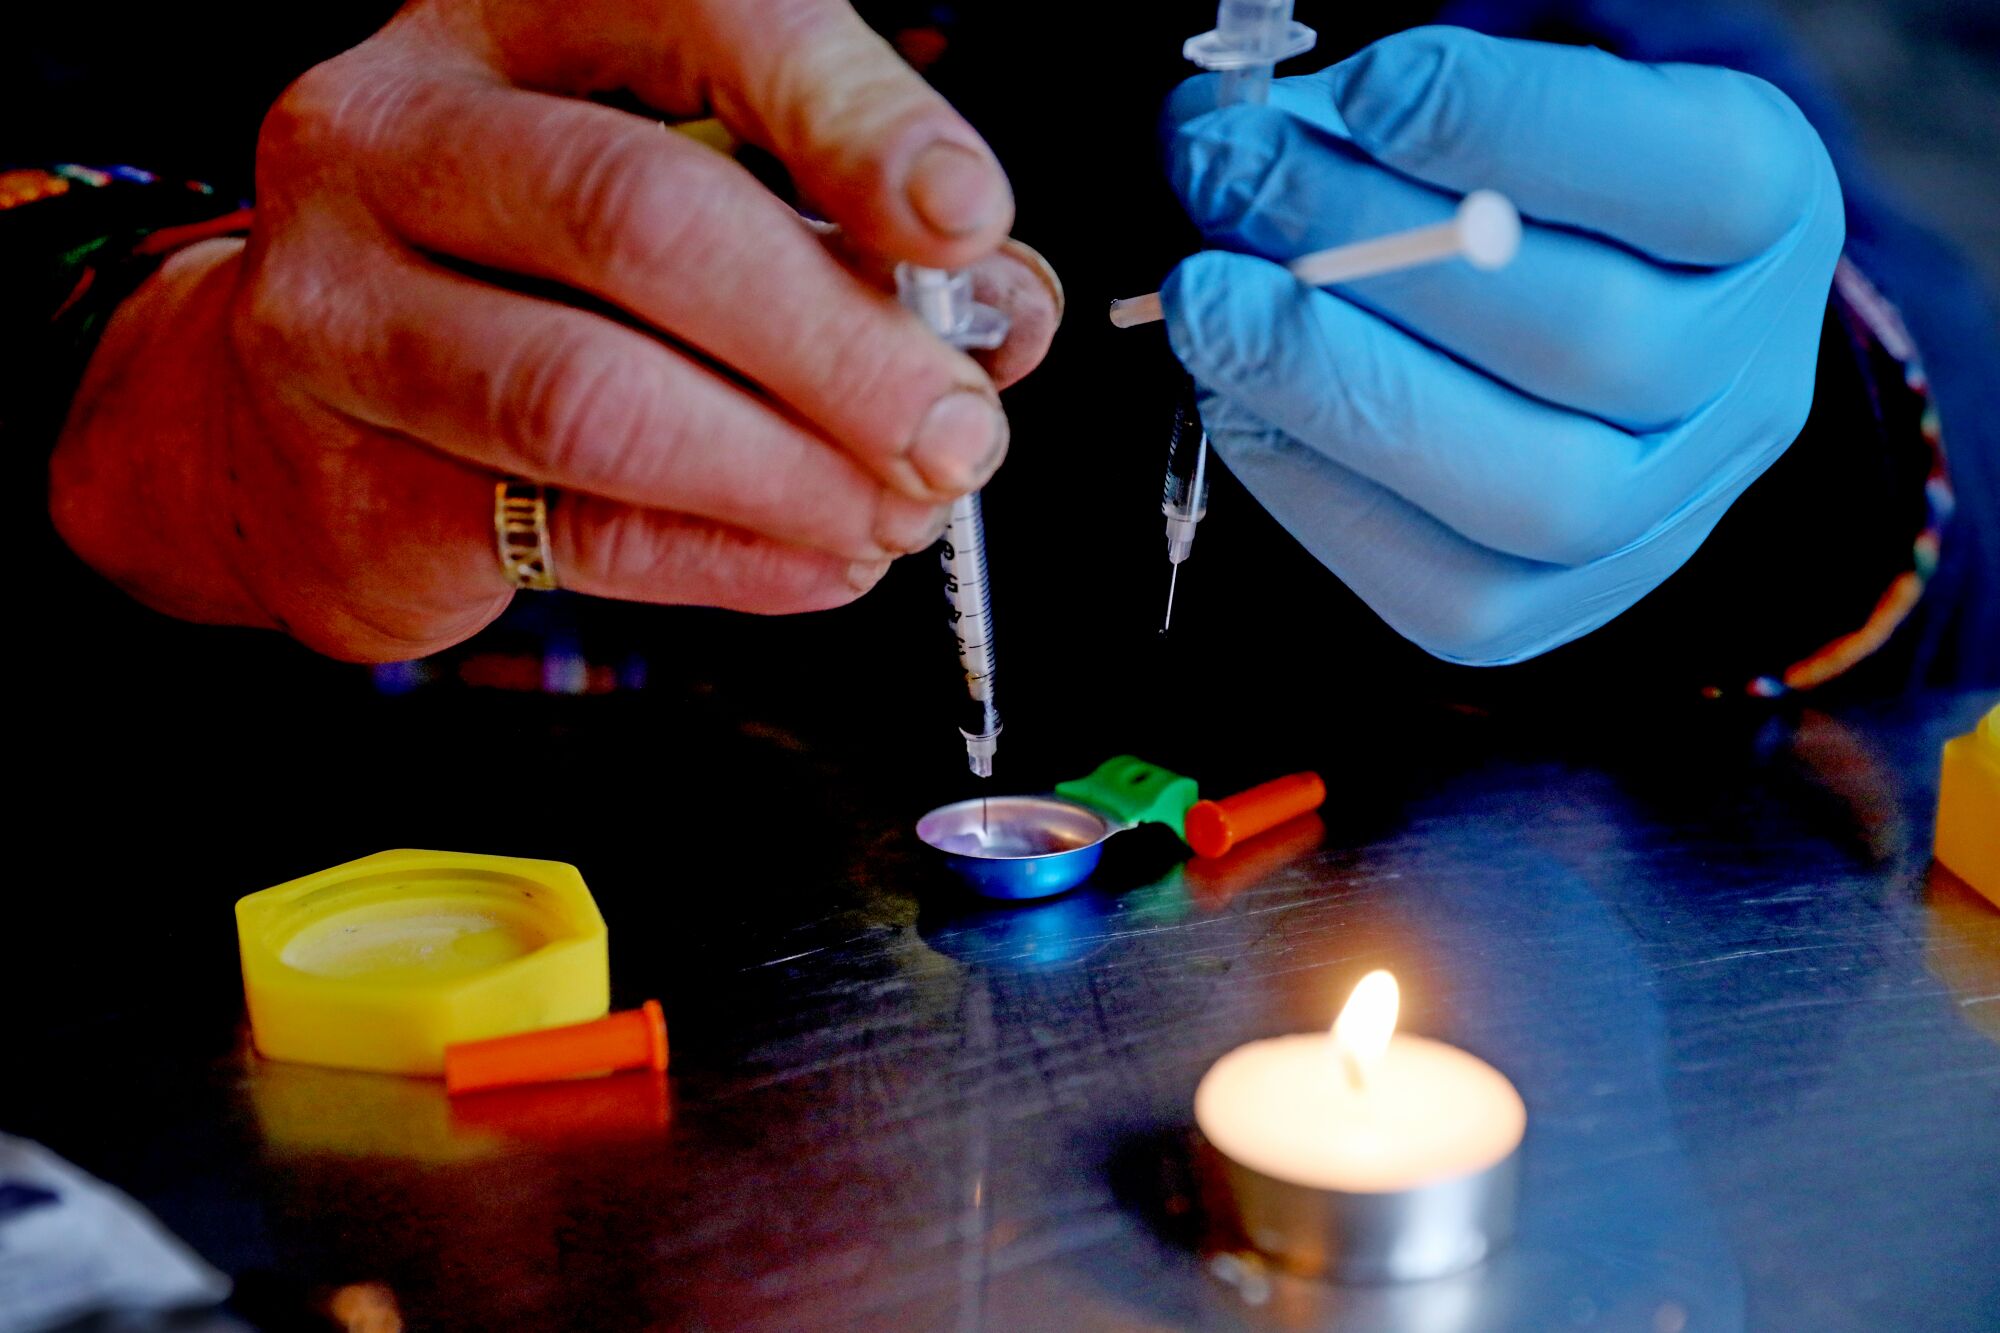 A man prepares an injection